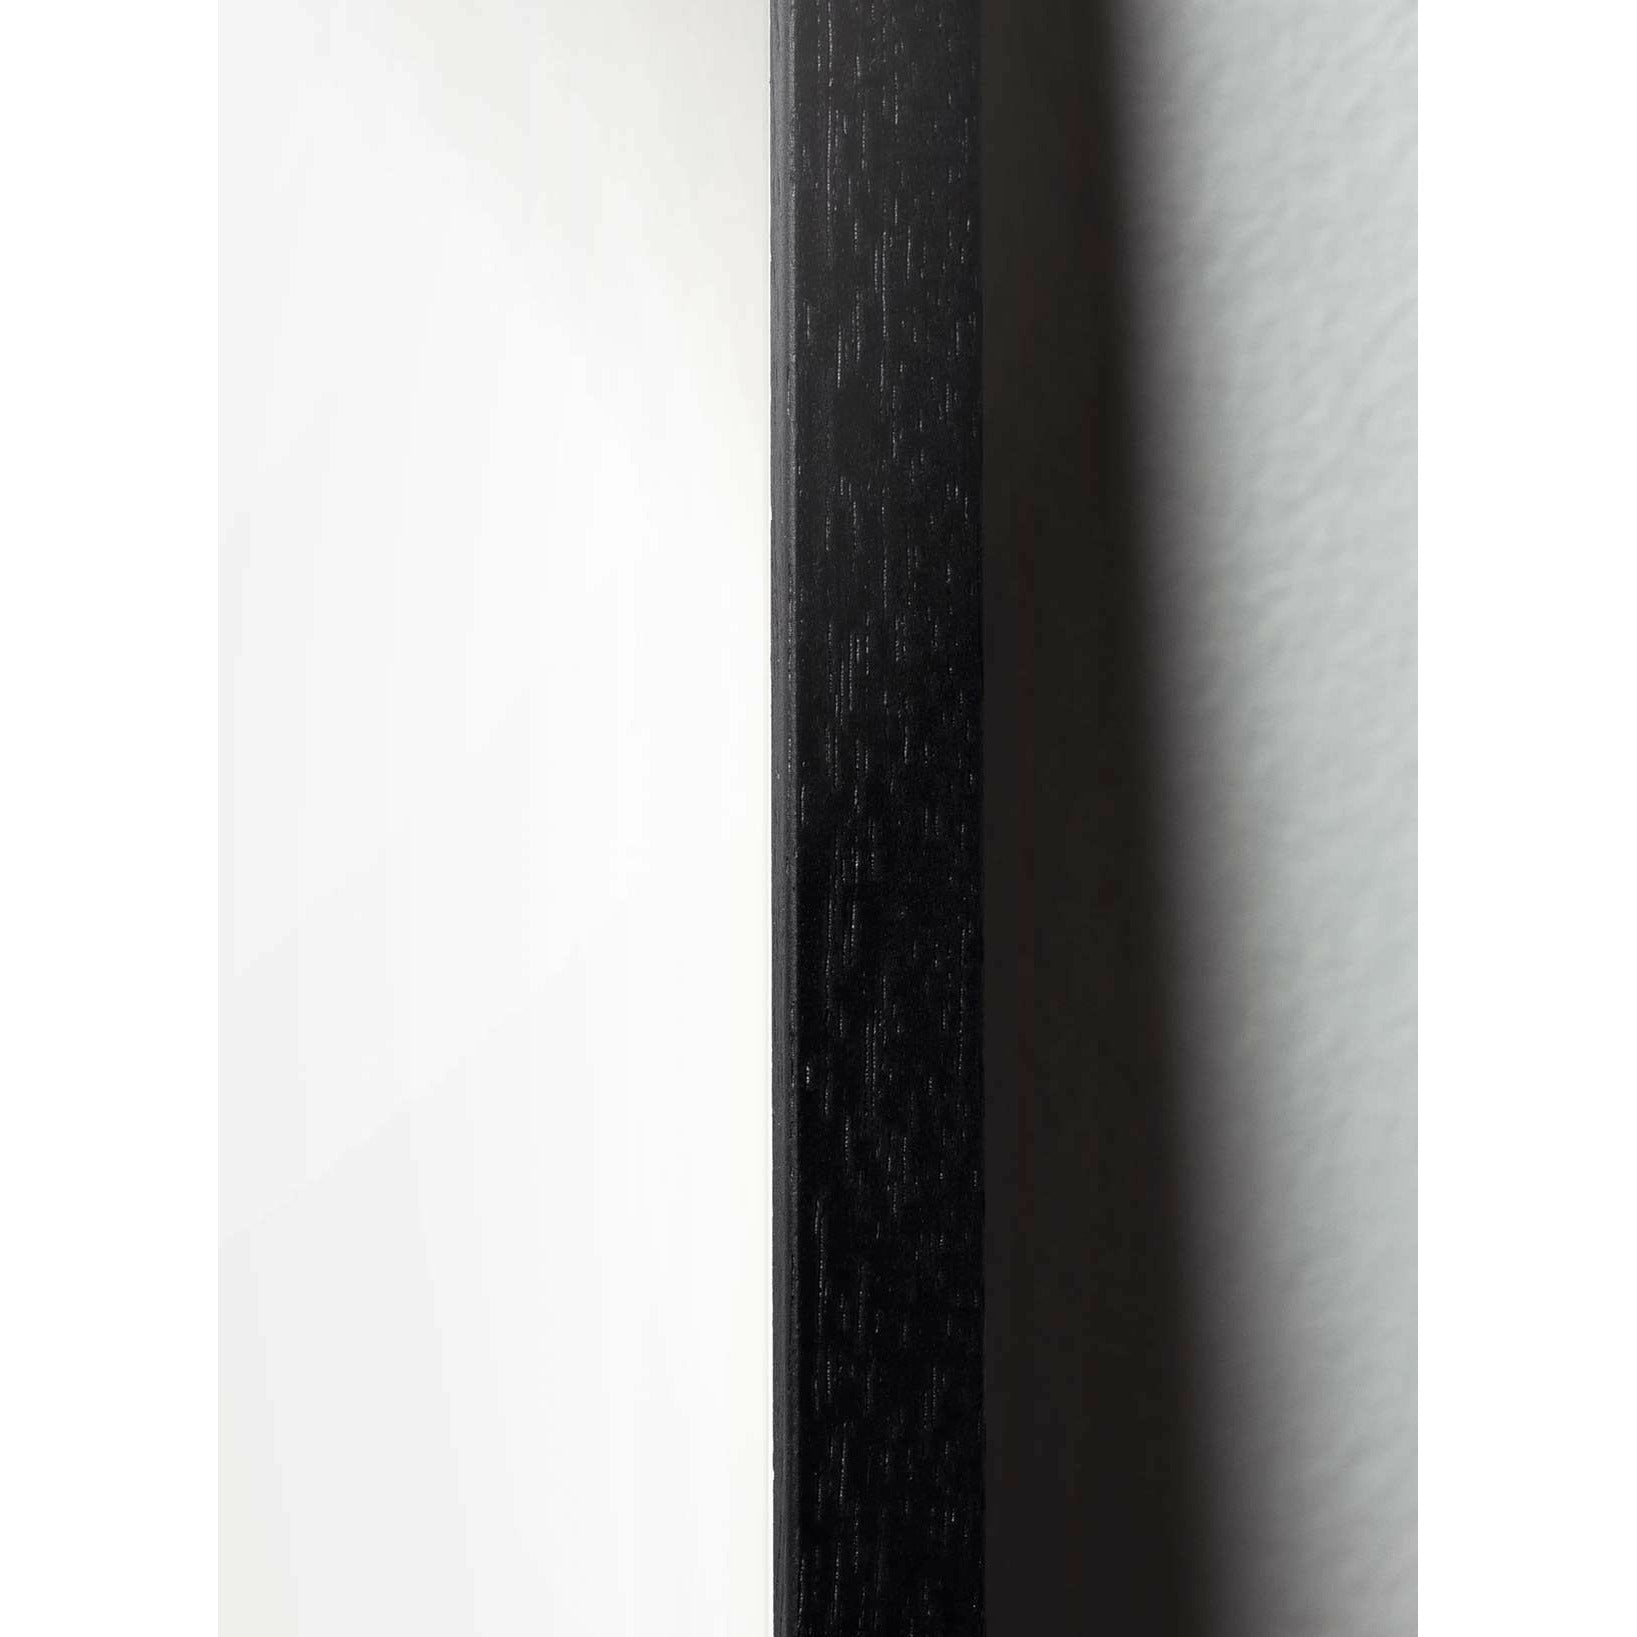 Póster de línea de cono de pino de creación, marco en madera lacada negra de 70x100 cm, fondo blanco